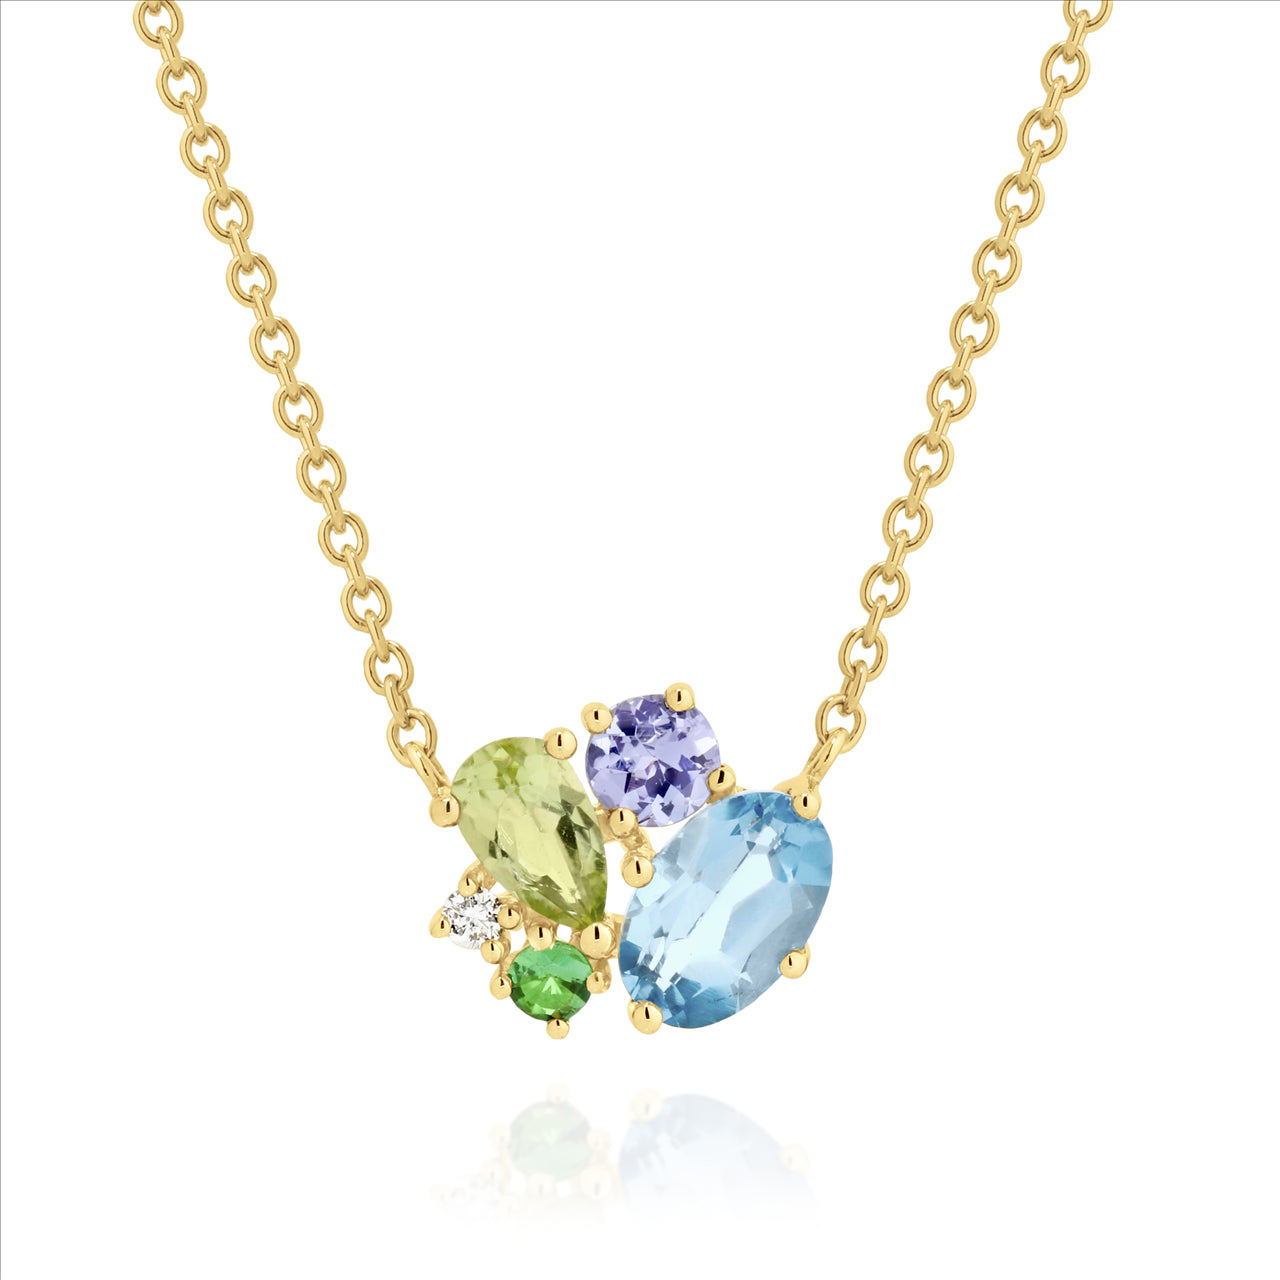 Radiant 9ct Yellow Gold Gemstone Scatter Necklet with Blue Topaz, Peridot, Tsavorite Garnet, Tanzanite, and Diamond - 41cm Chain